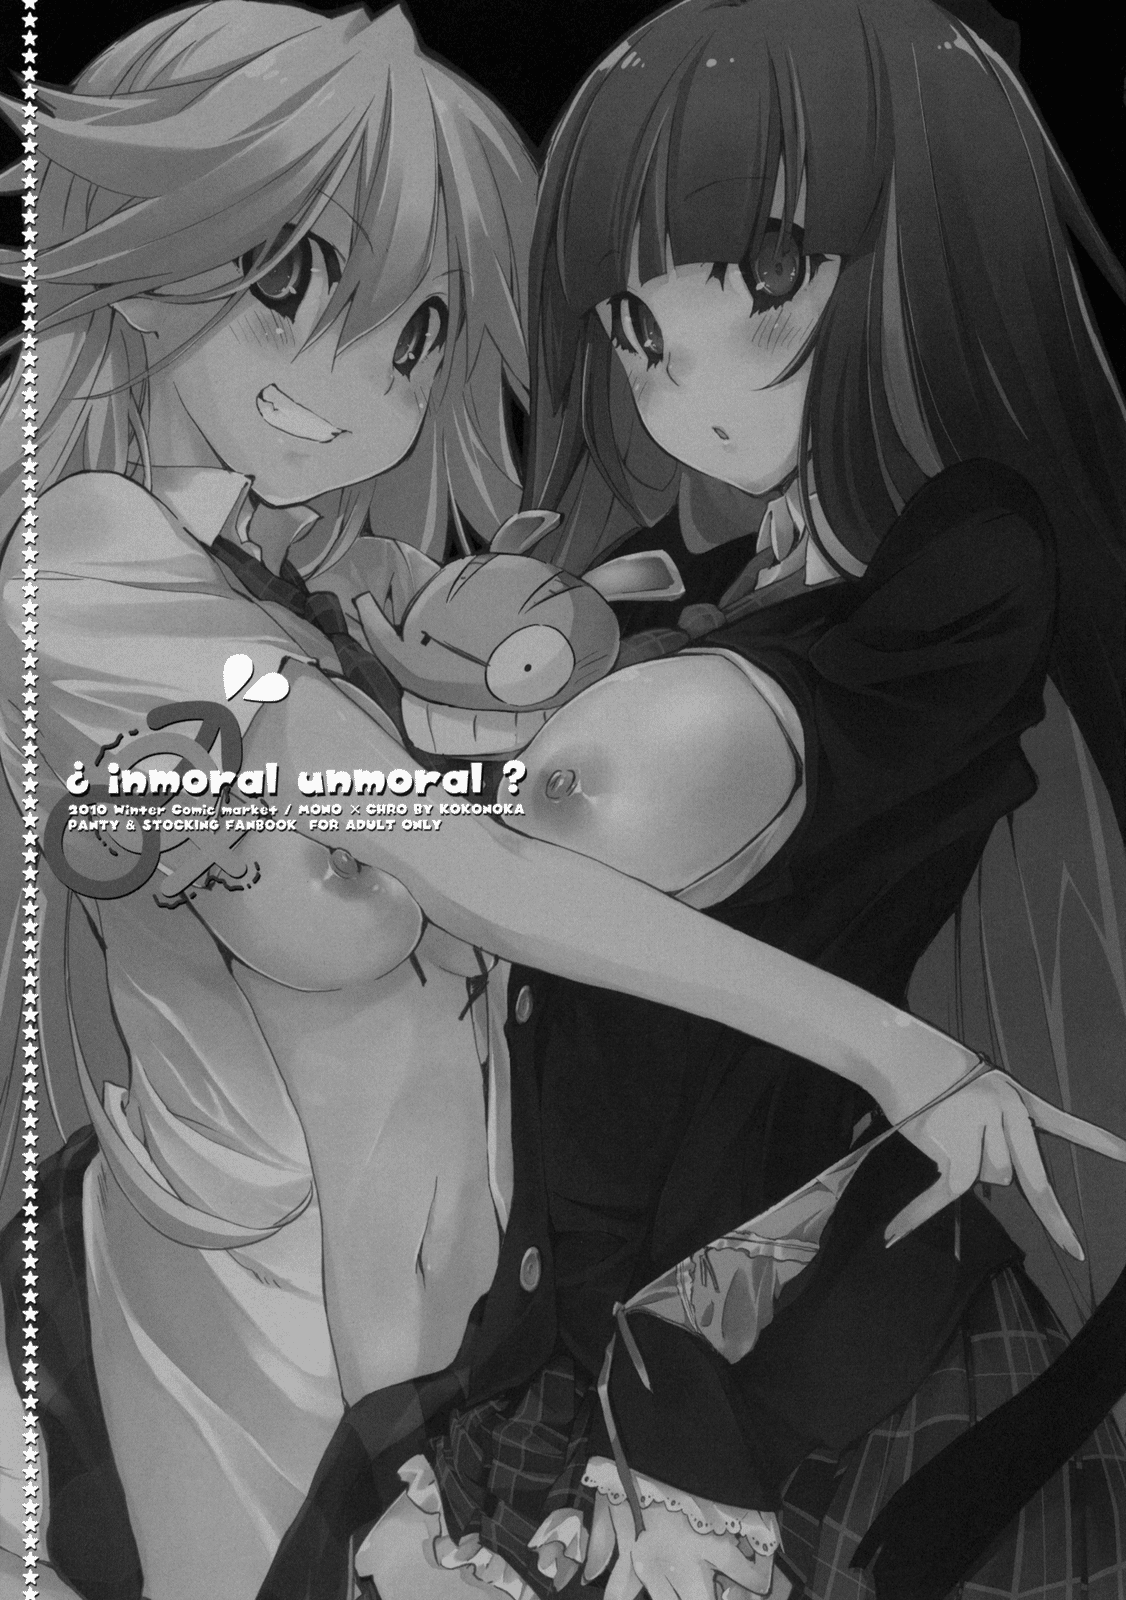 inmoral unmoral hentai manga picture 2